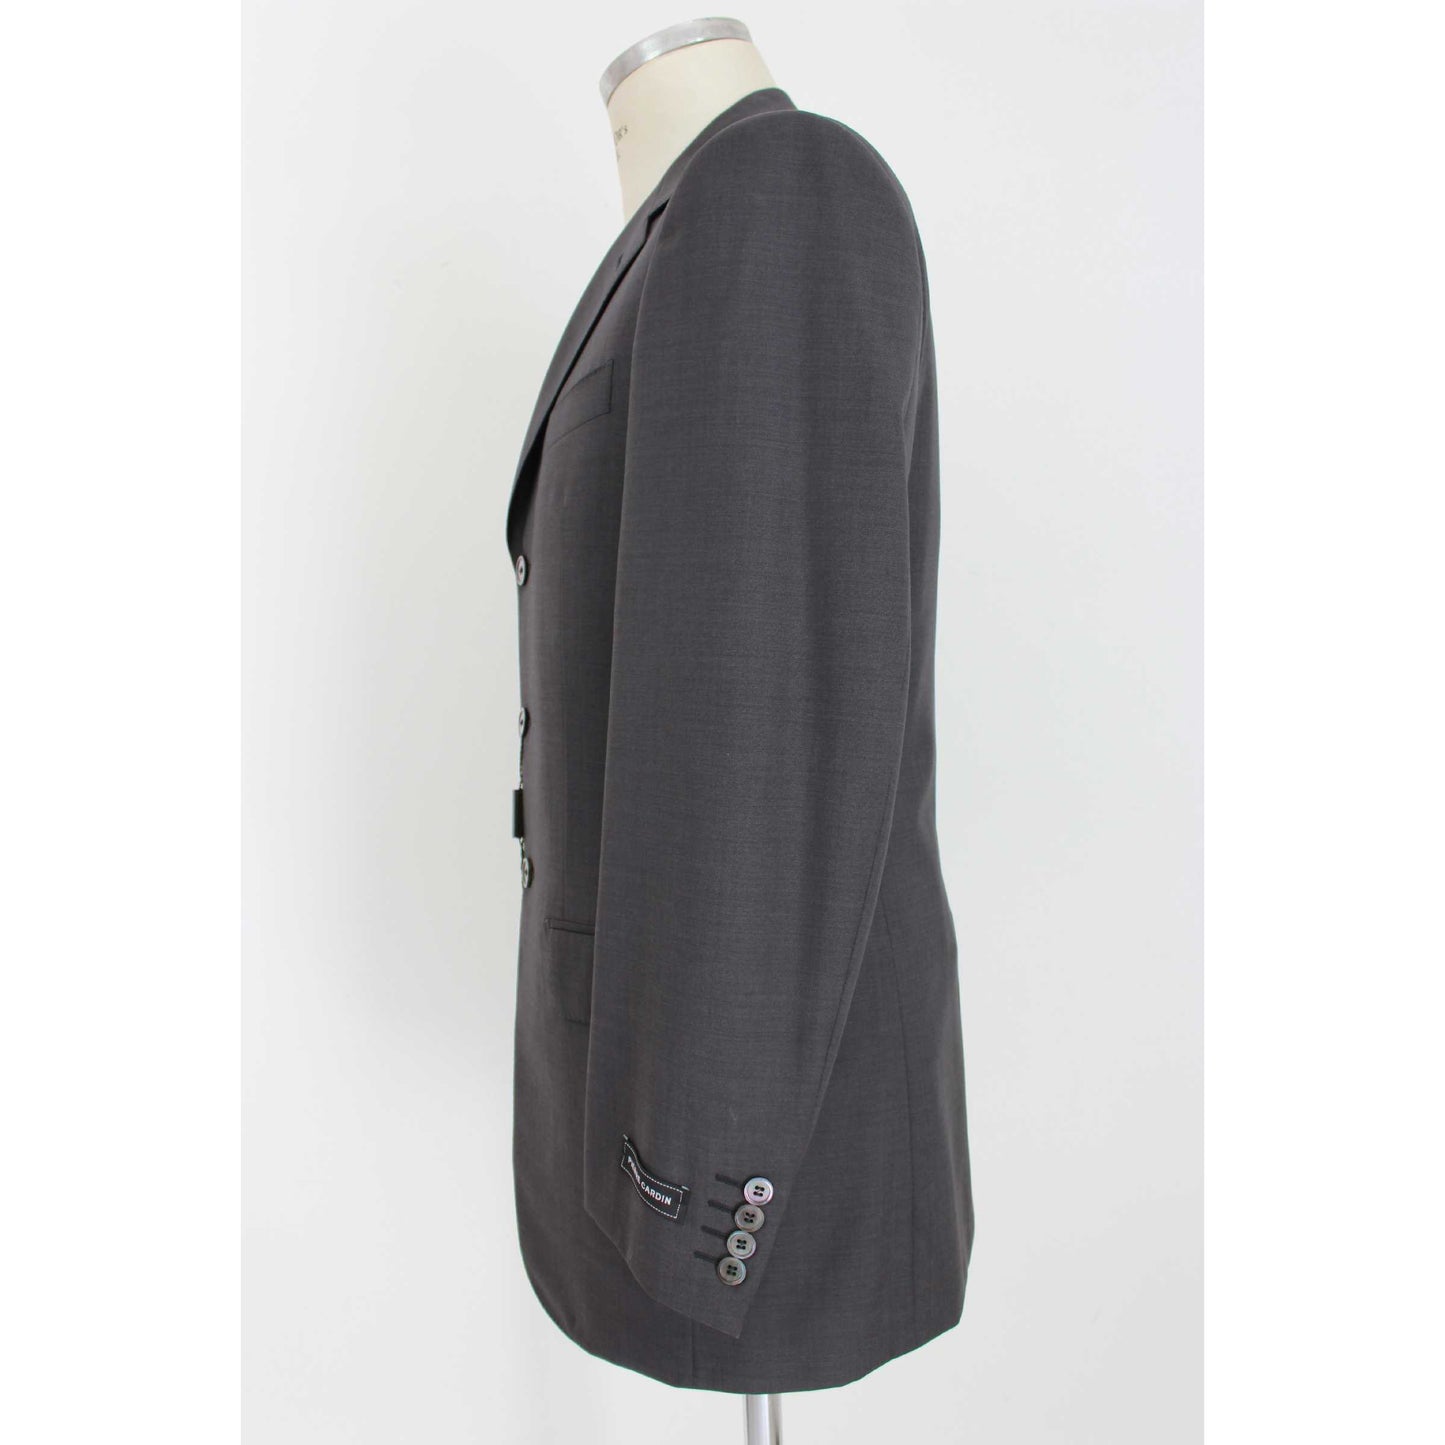 Pierre Cardin Vintage Gray Wool Evening Pants Suit